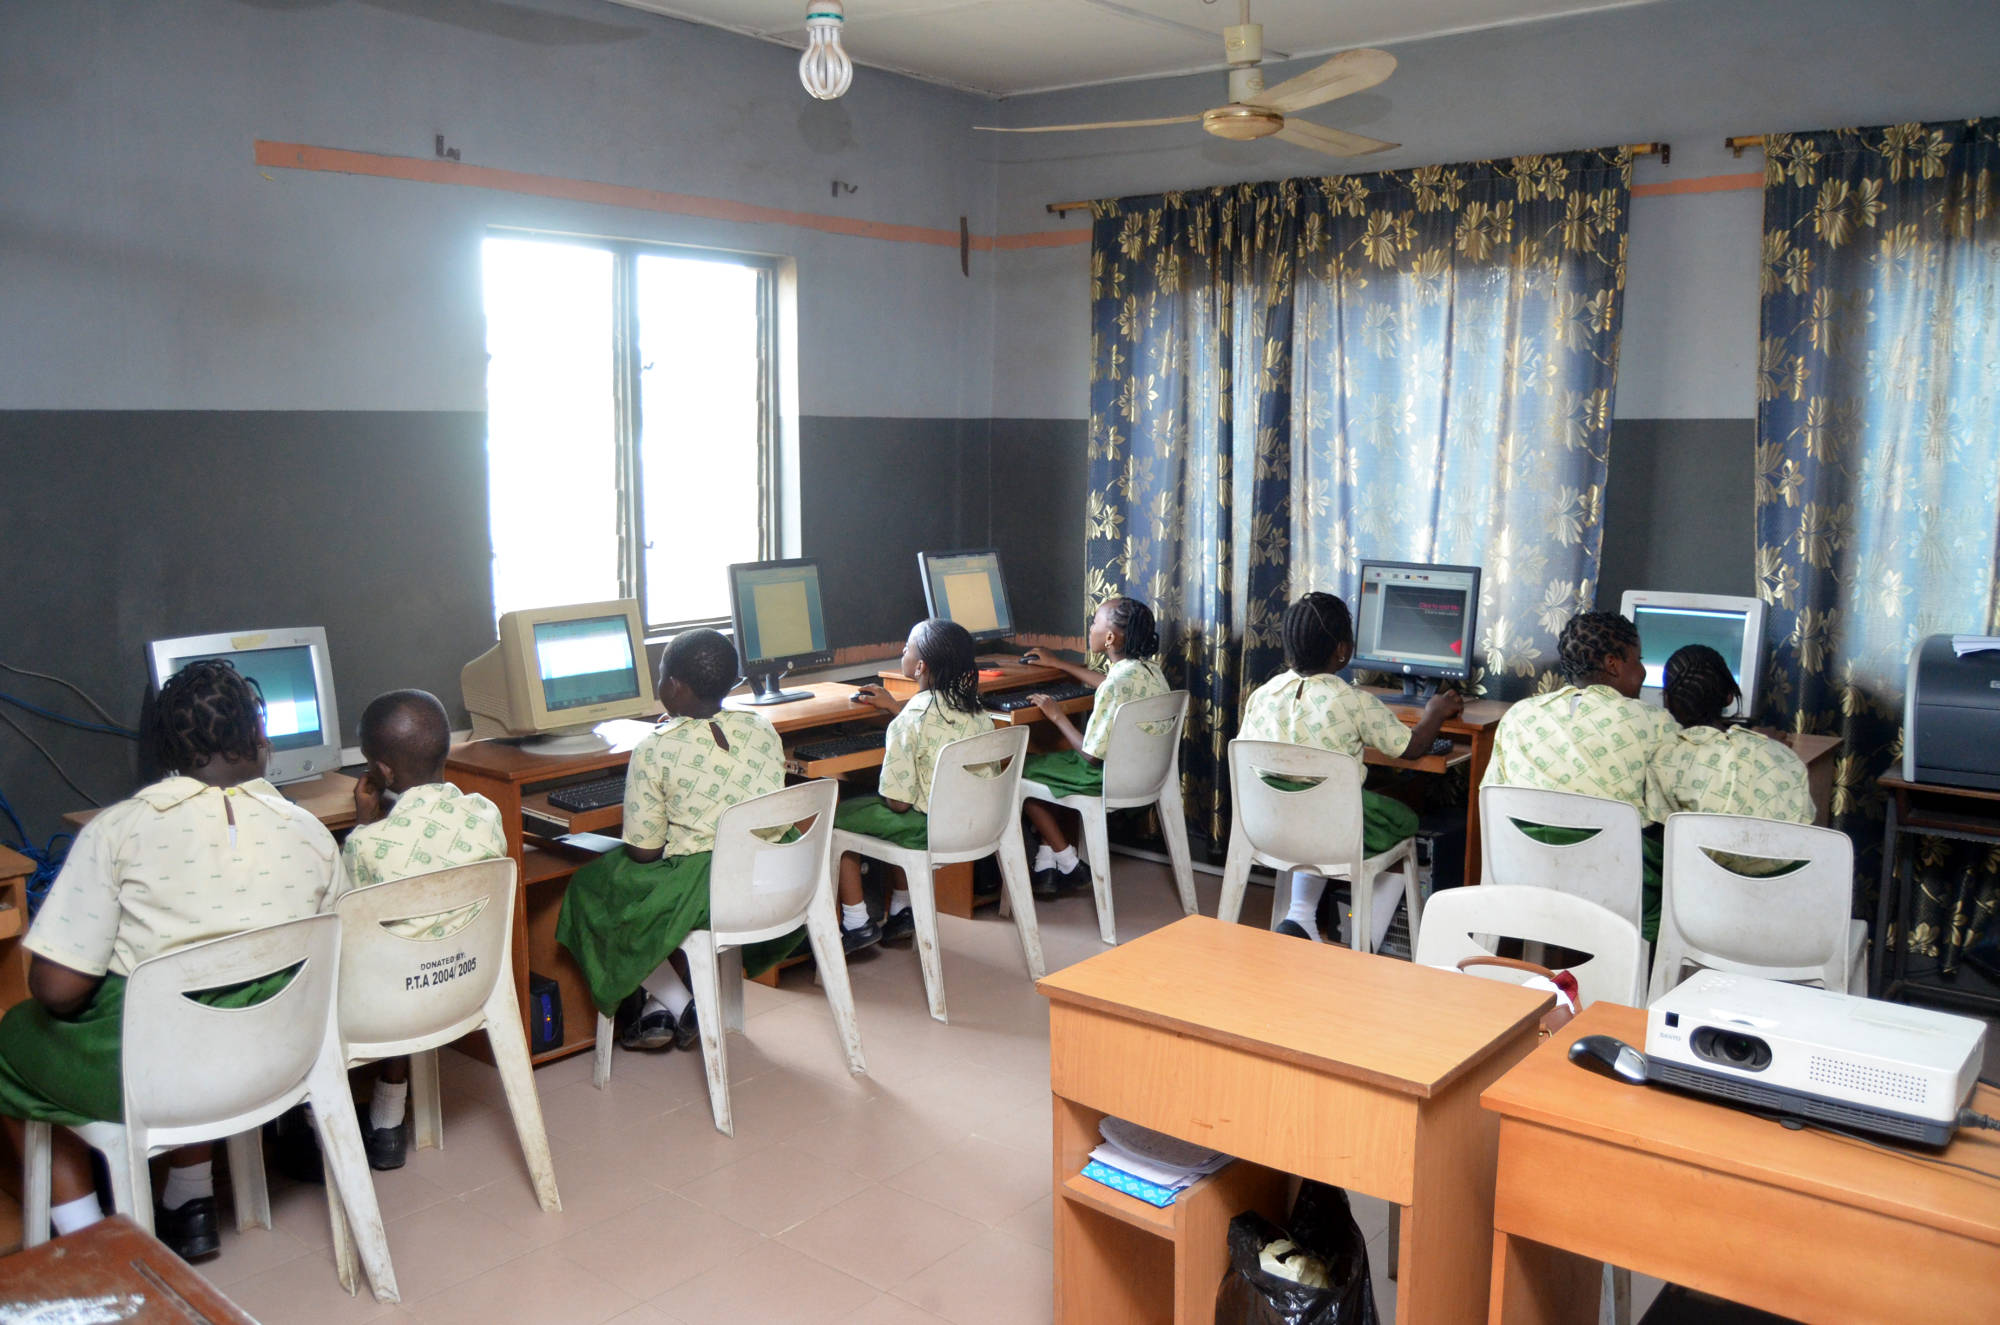 ICT Laboratory for Junior School